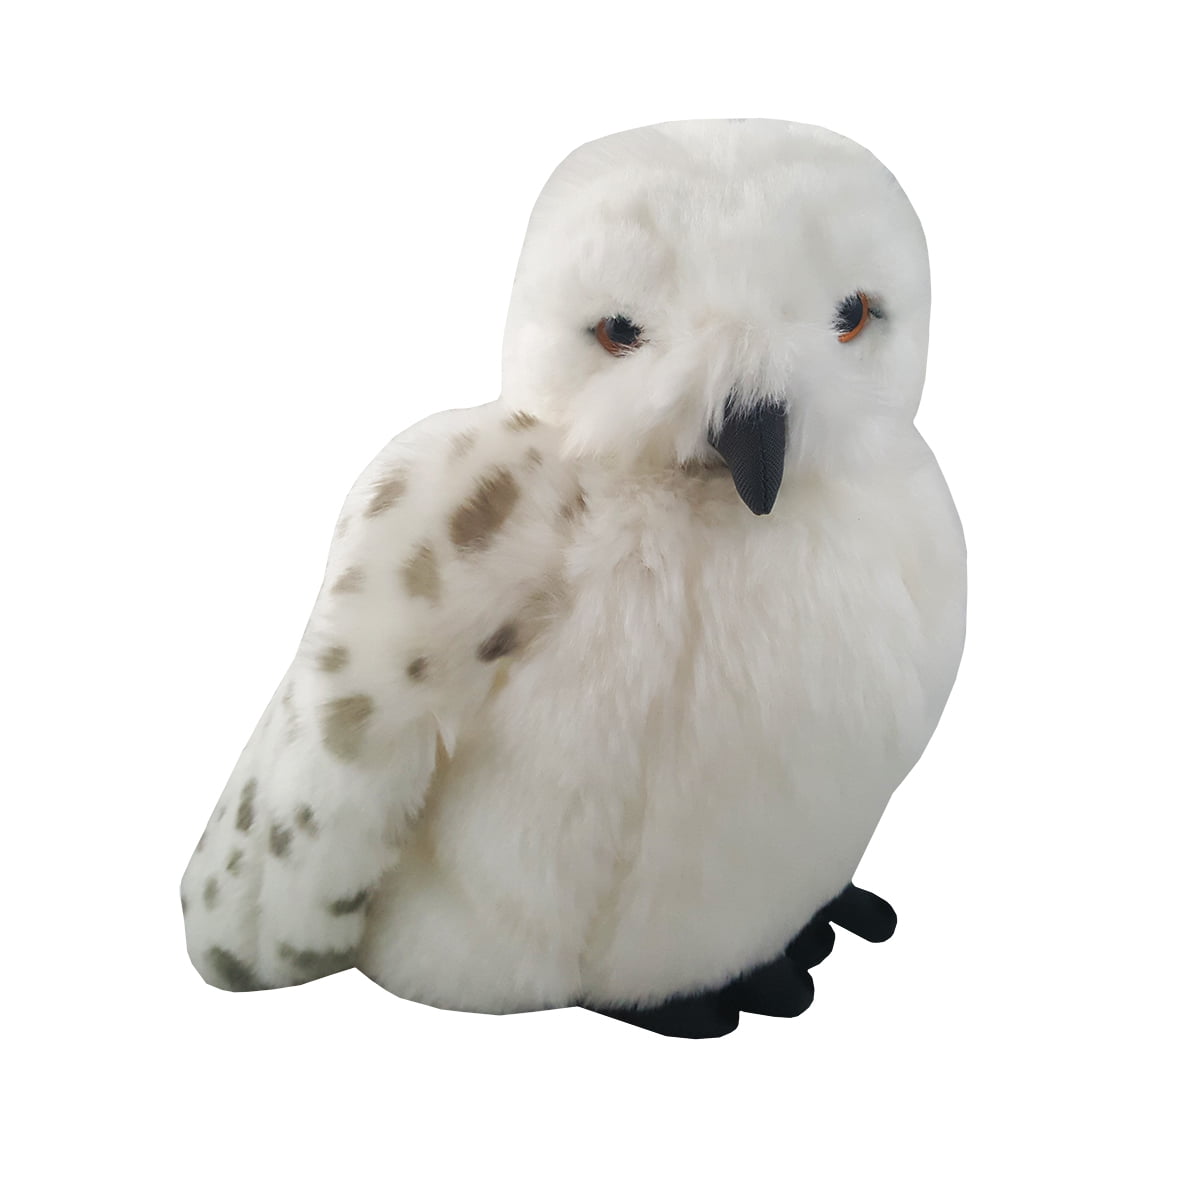 harry potter stuffed owl